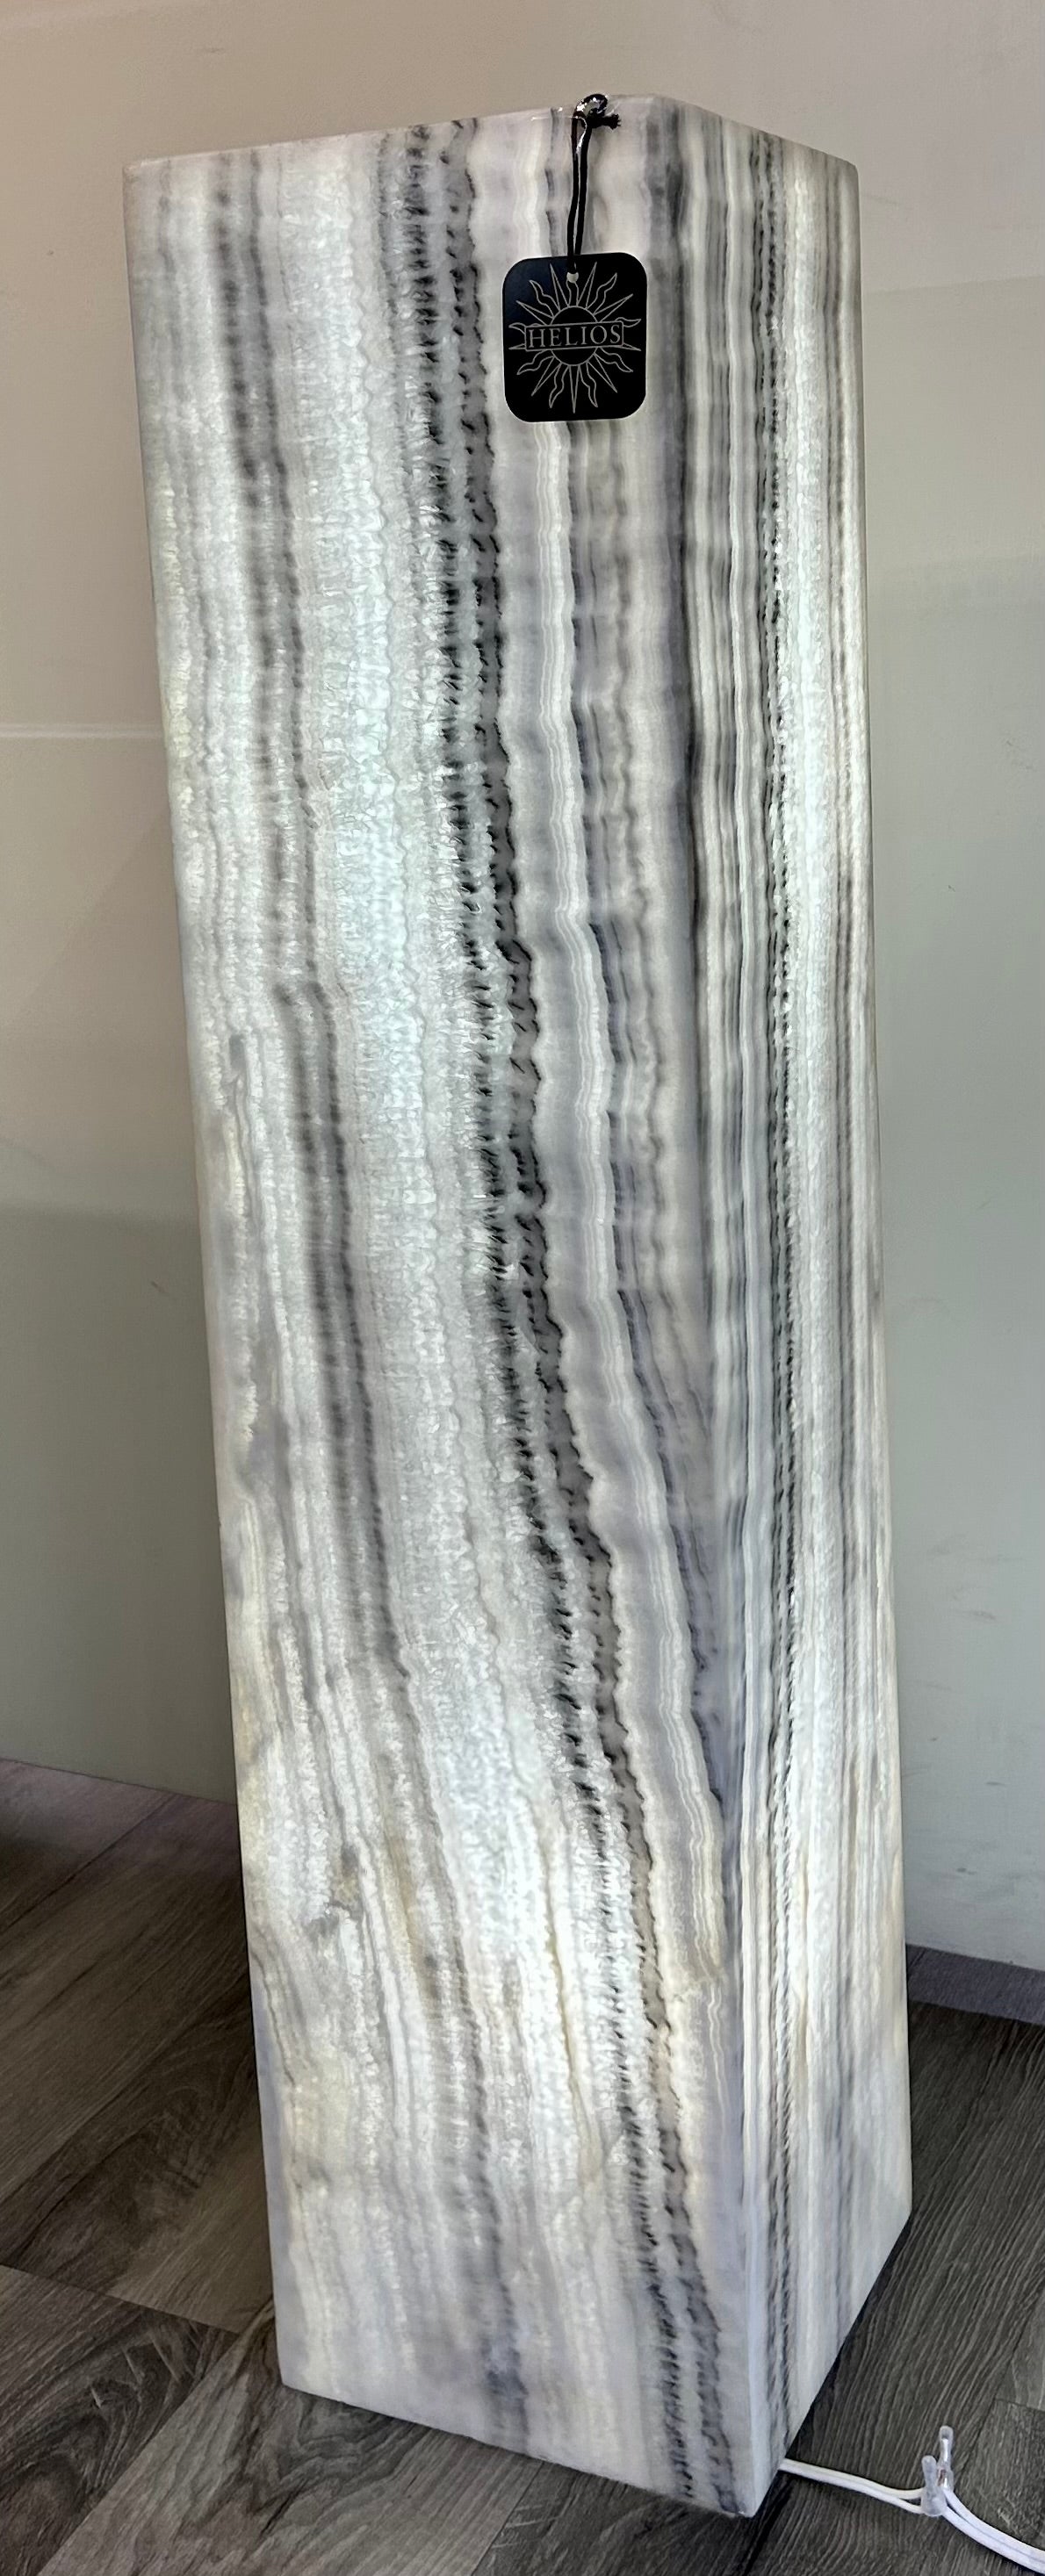 Zebra Onyx Lamp